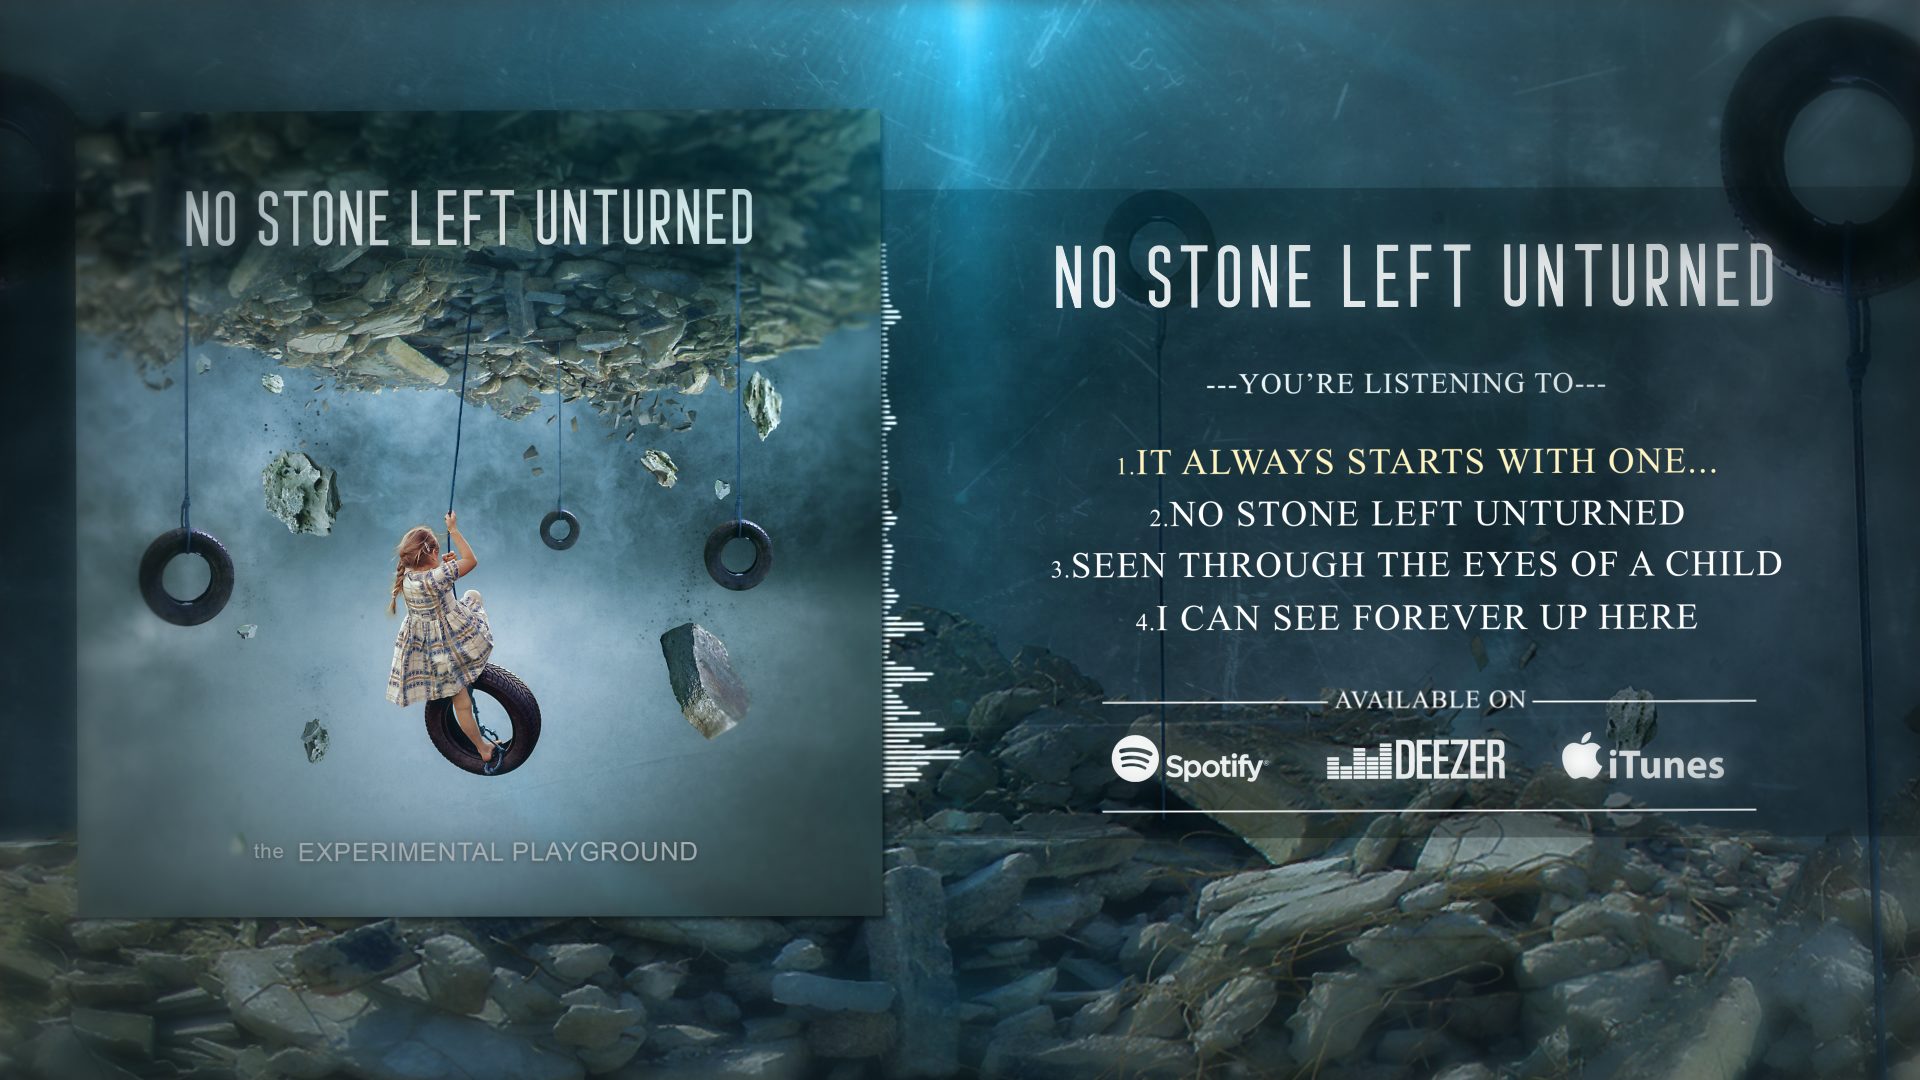 Leave no Stone Unturned. No Stone left Unturned. A Stone left Unturned. The Rolling Stones no Stone Unturned.